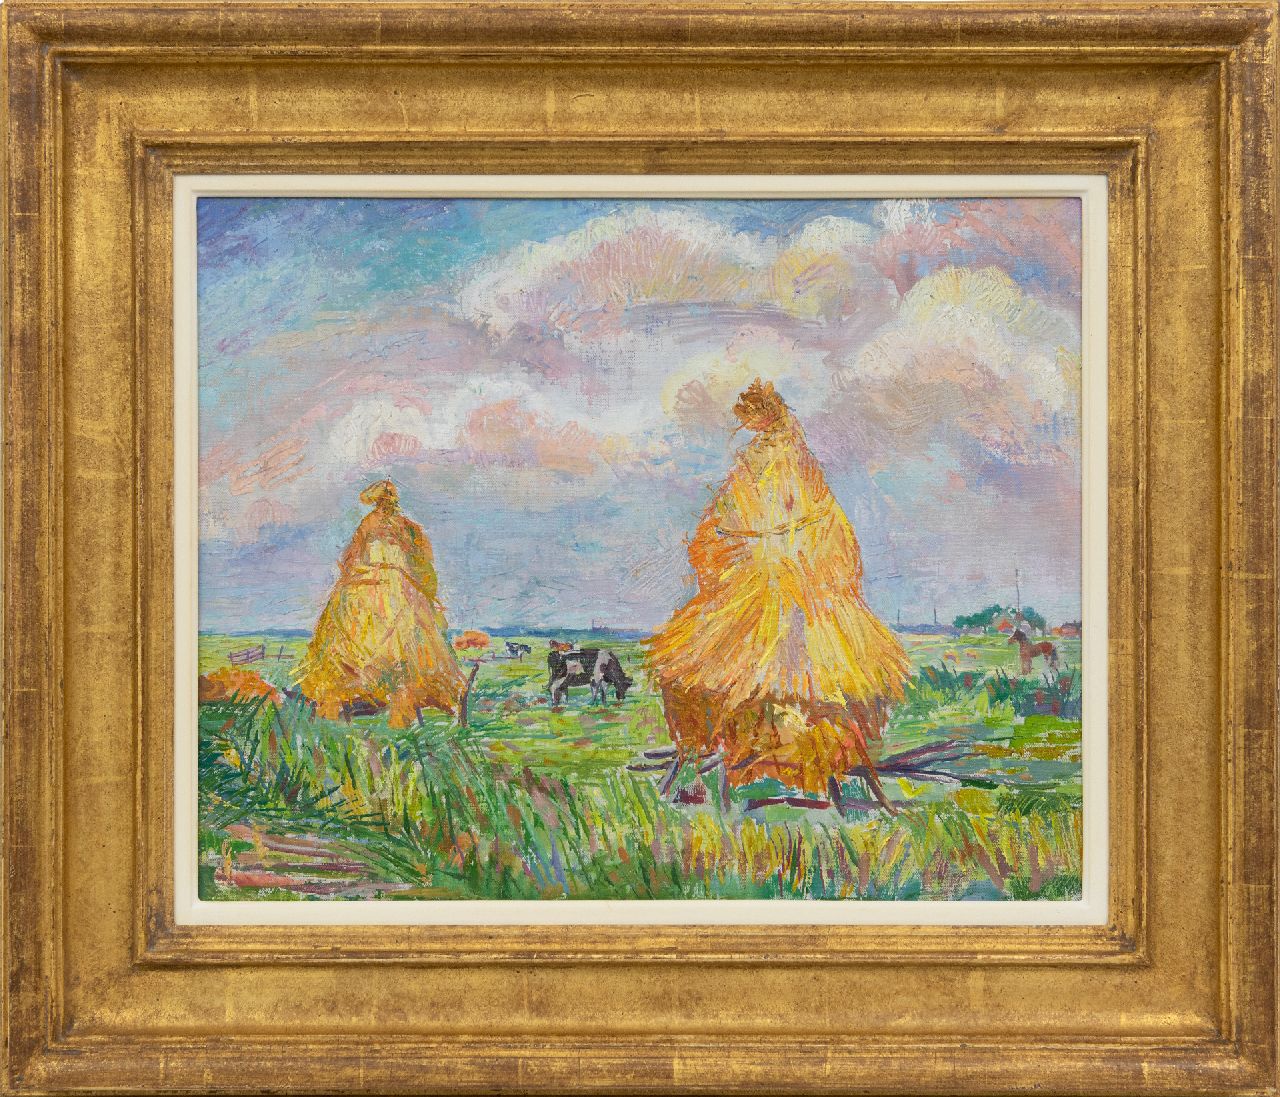 Pijpers E.E.  | 'Edith' Elizabeth Pijpers, Heuschober im Feld, Öl auf Leinwand 36,9 x 45,8 cm